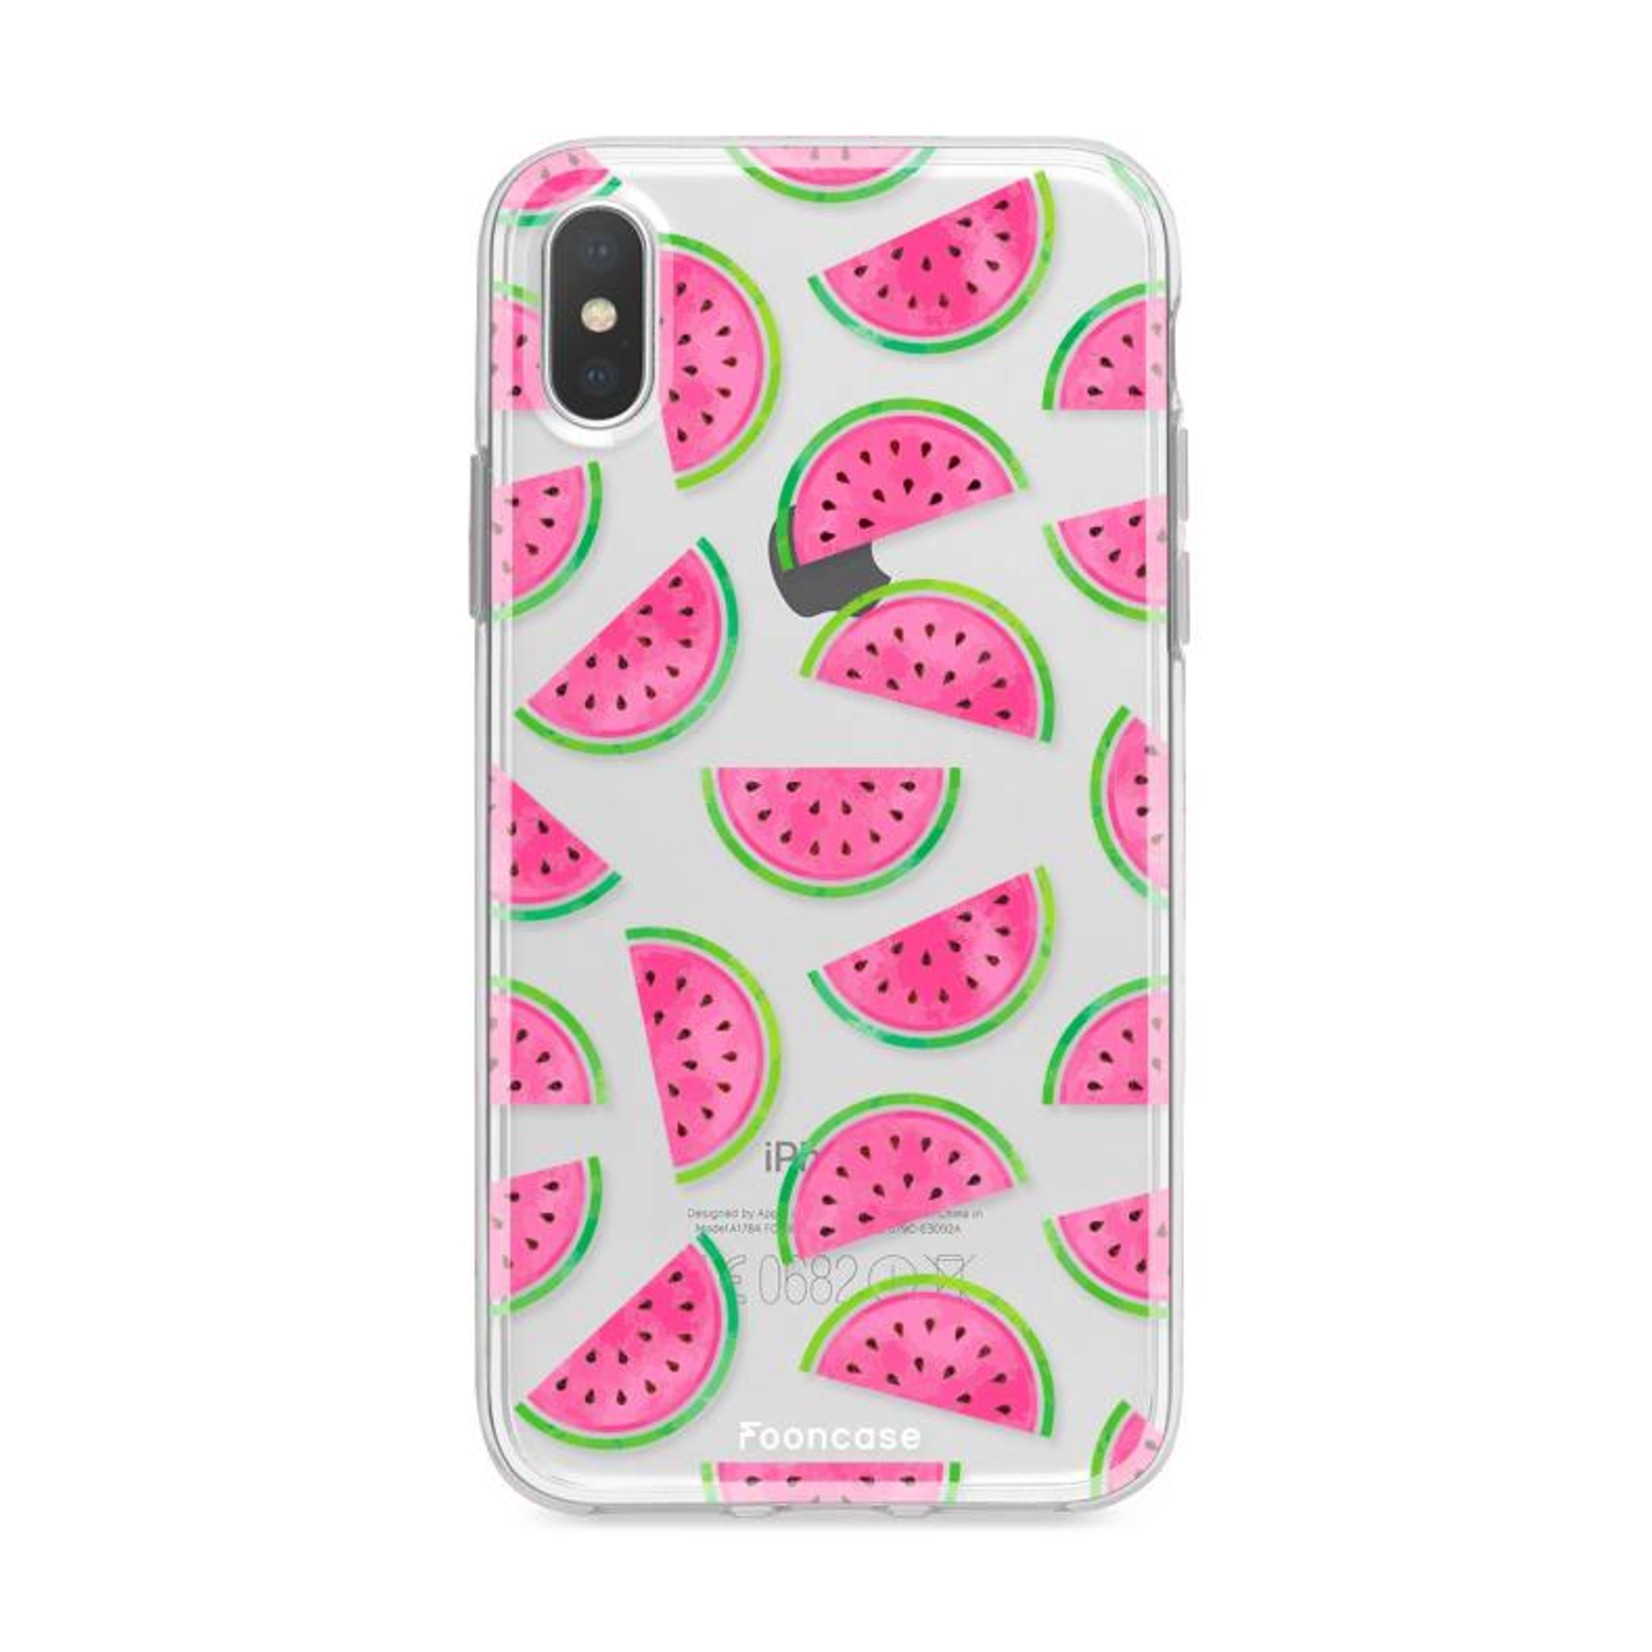 FOONCASE Iphone XS Max Case - Watermelon